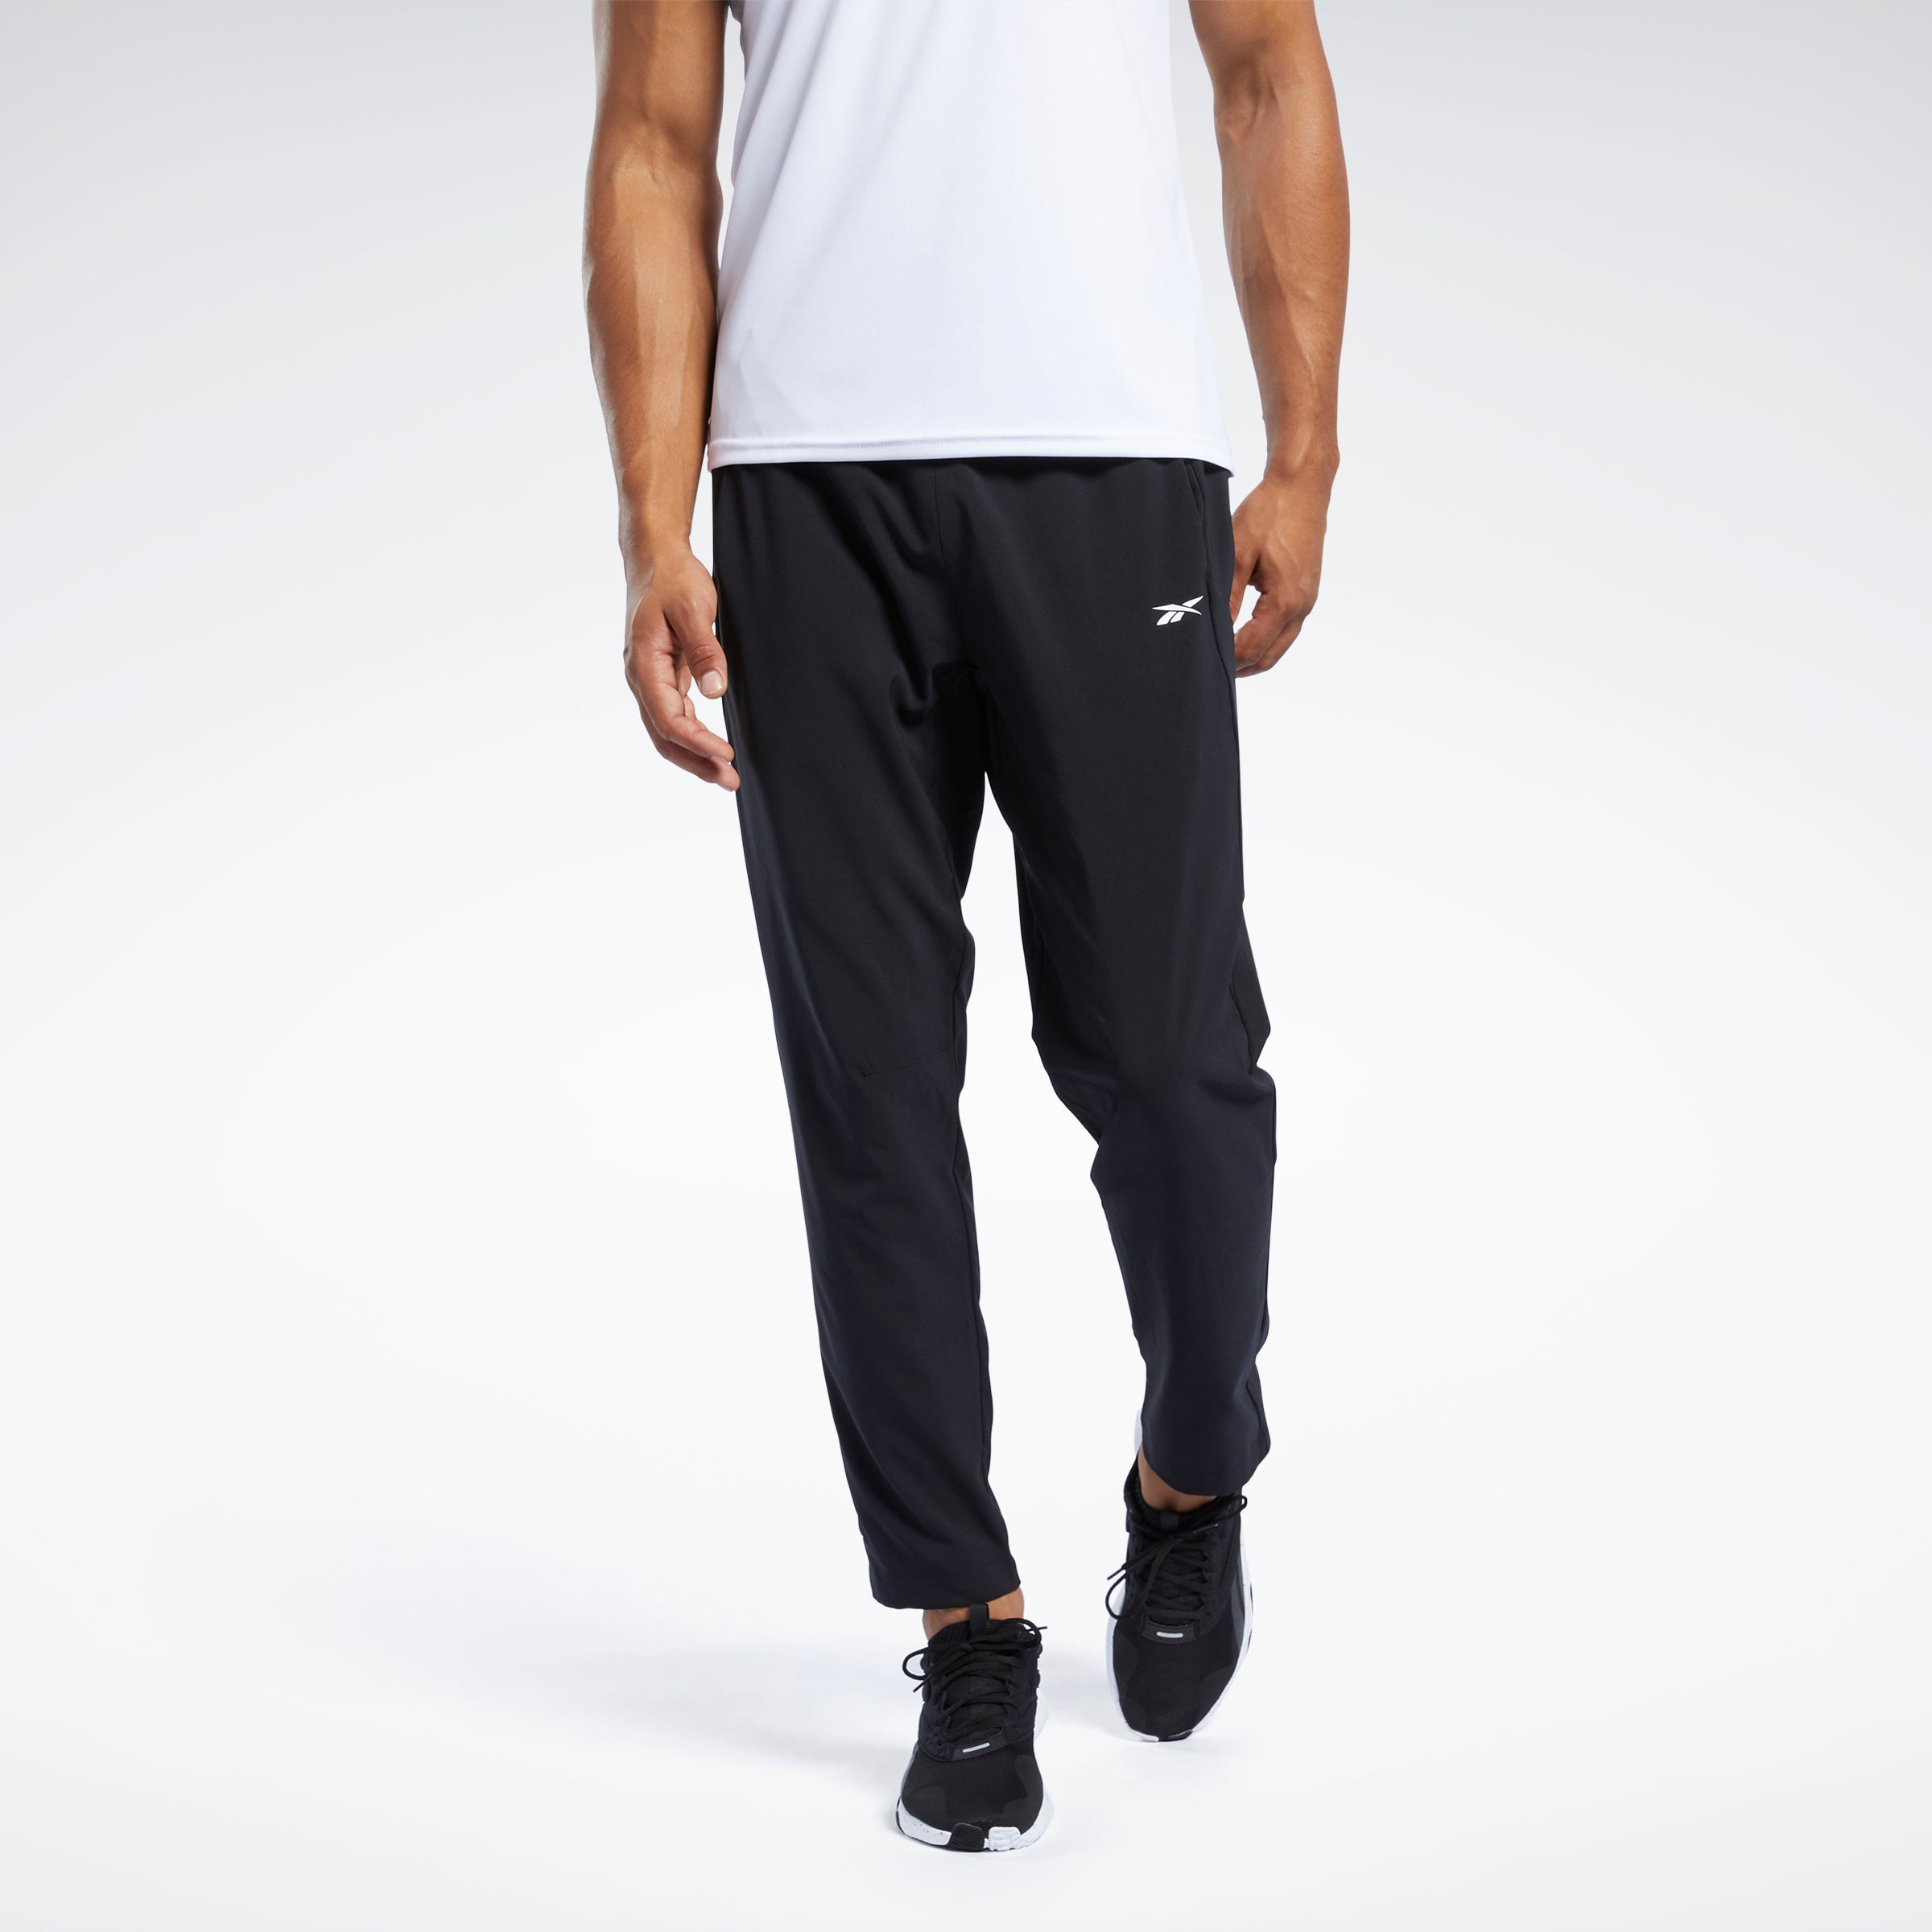 Reebok Training woven tech sweatpants in black - ShopStyle Activewear Pants